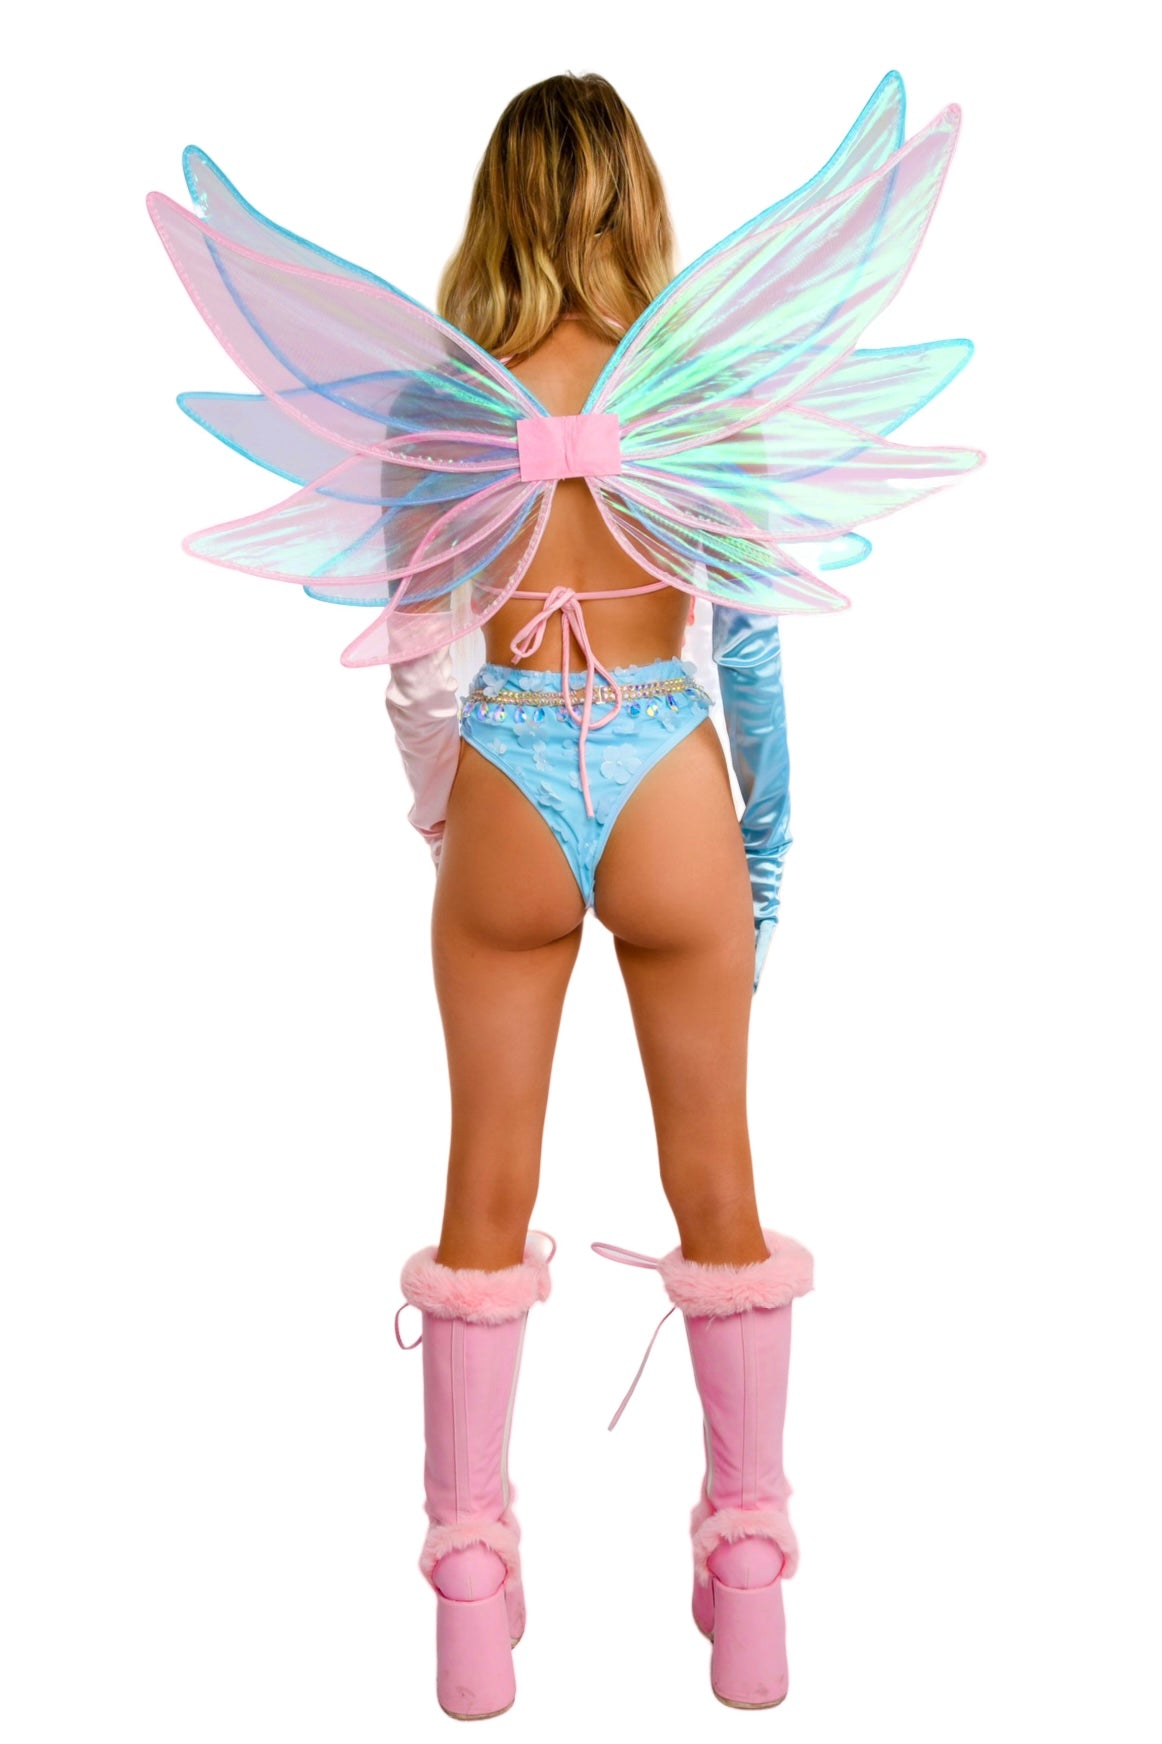 Pixie Dream Wings